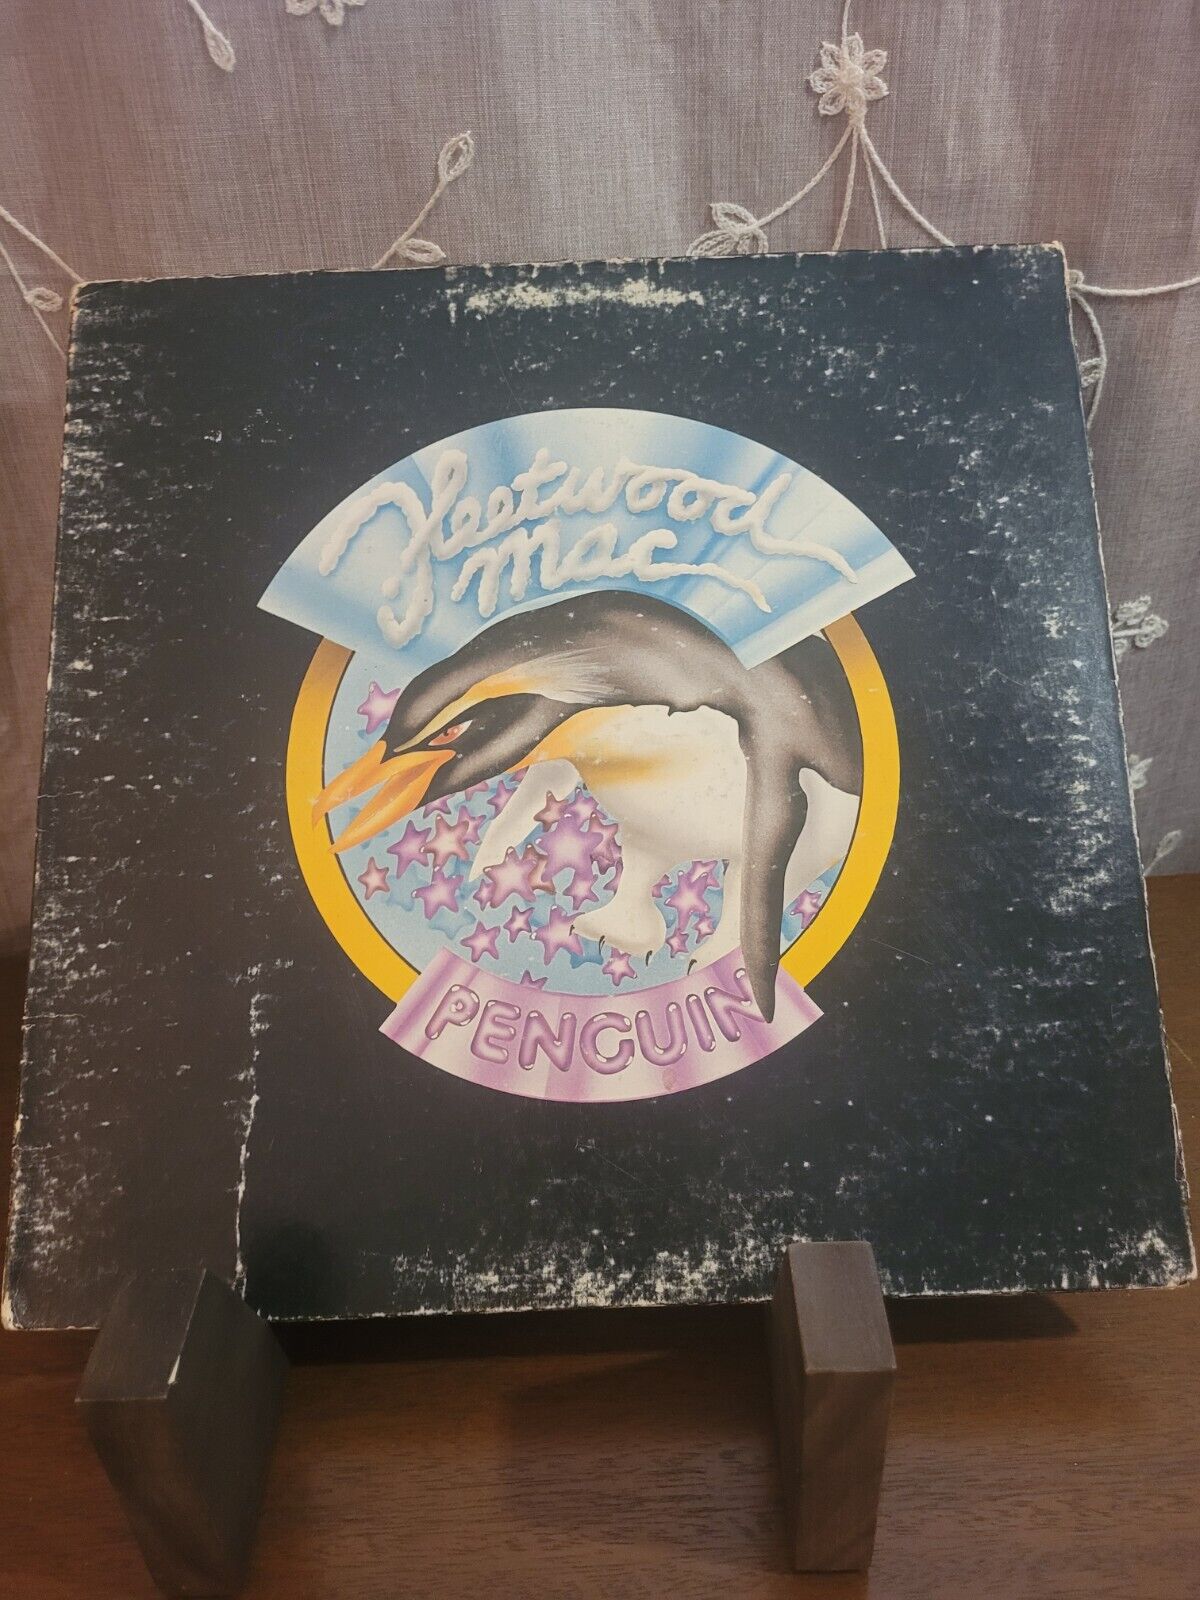 Fleetwood Mac - Penguin 1973 Pop Rock Reprise MS-2138 